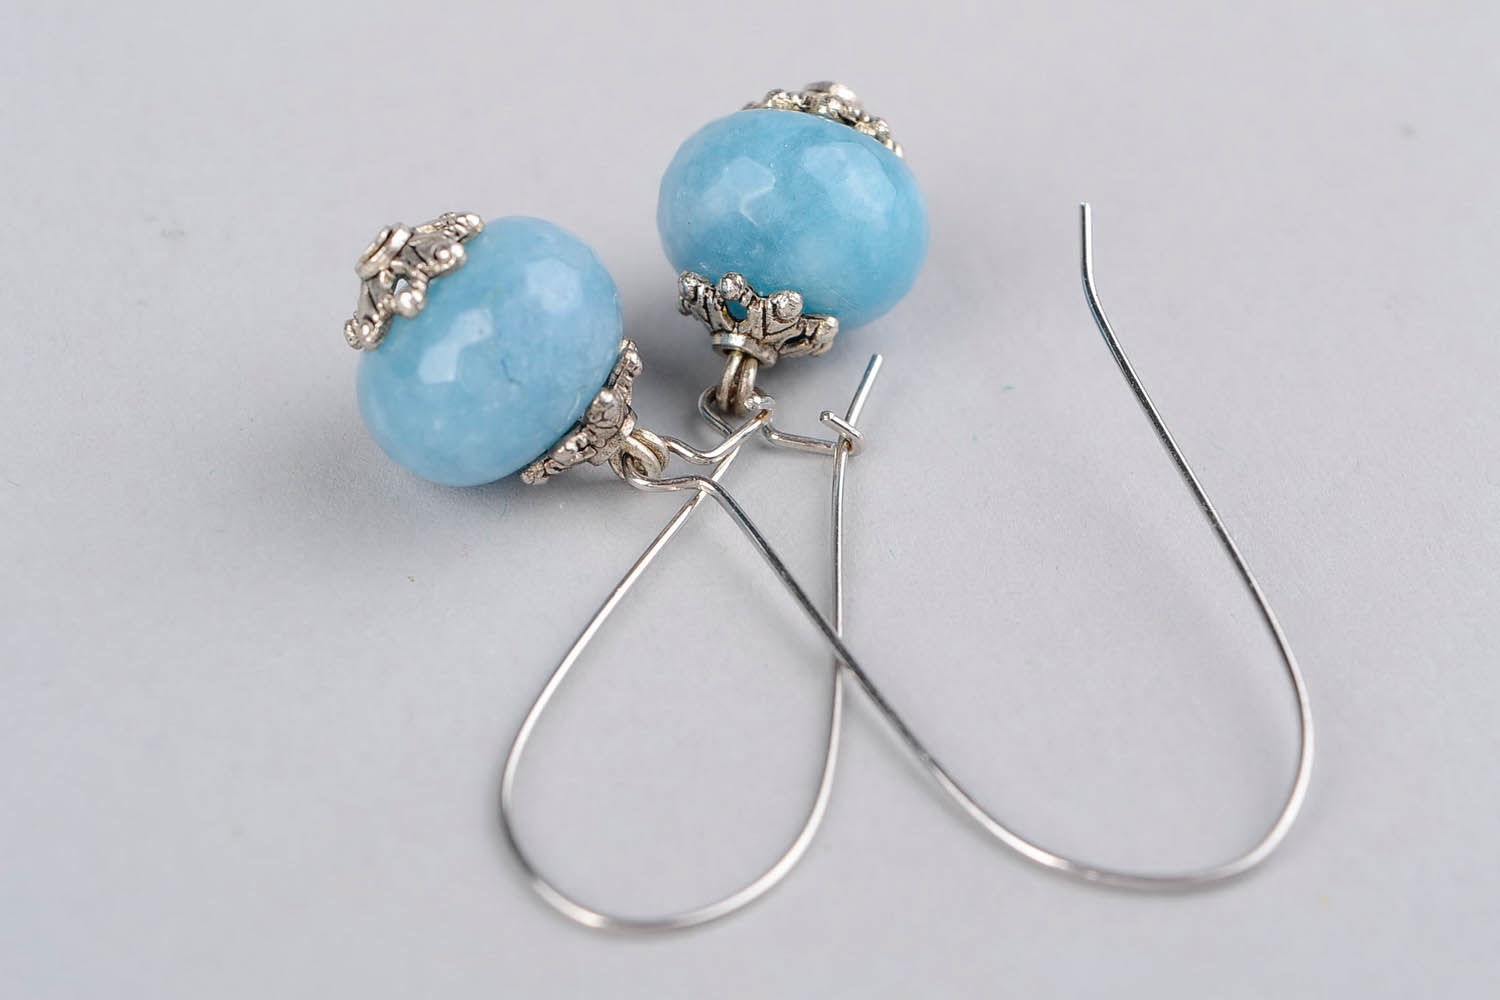 Ball Earrings with aquamarine photo 2